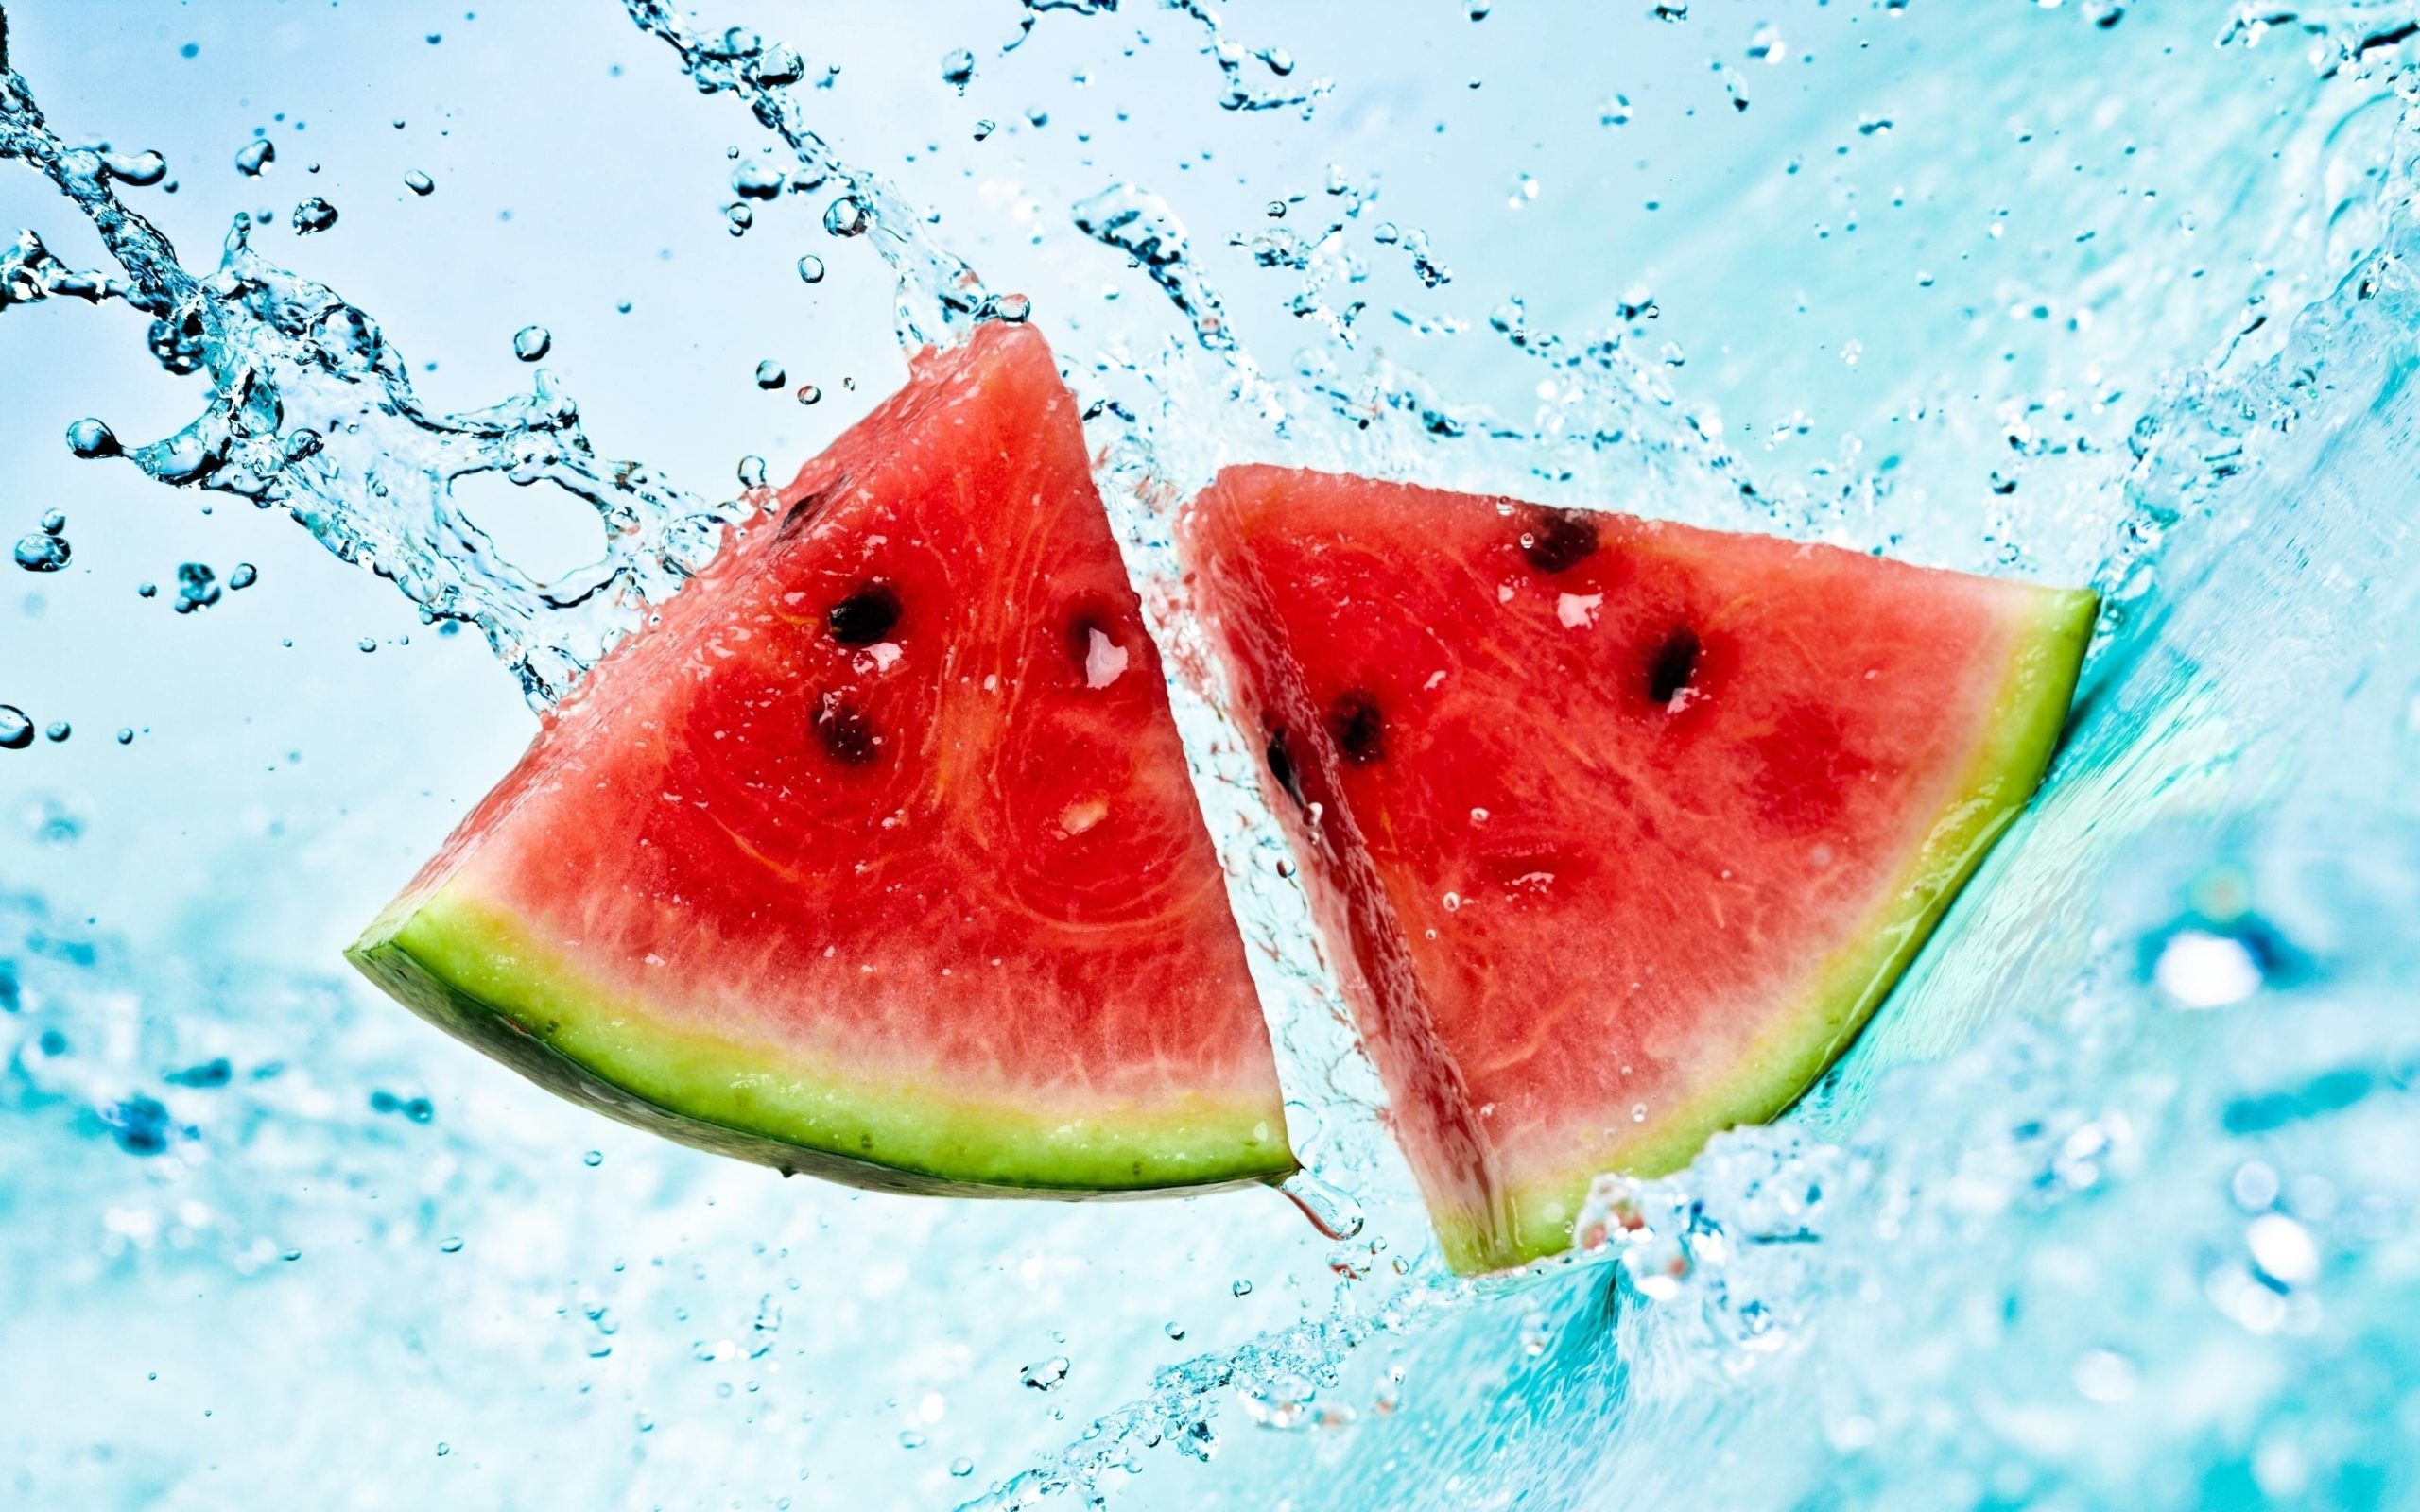 watermelon images